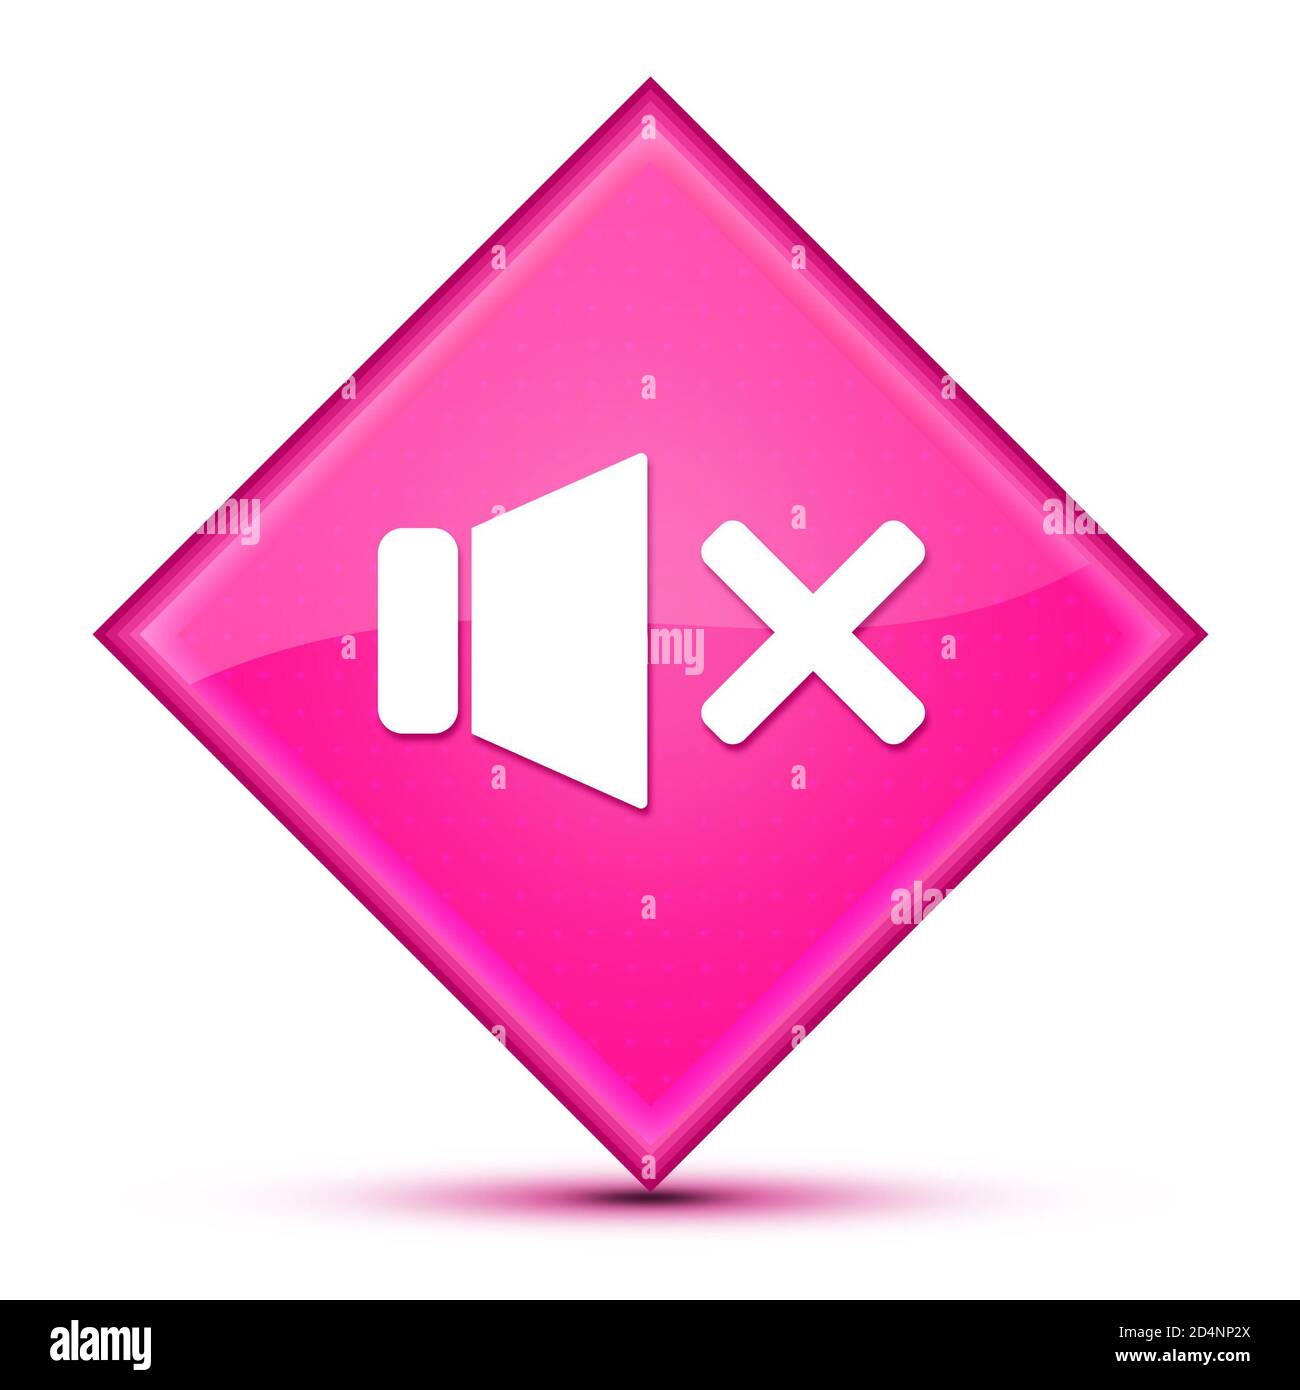 Mute sound icon isolated on luxurious wavy pink diamond button abstract illustration Stock Photo